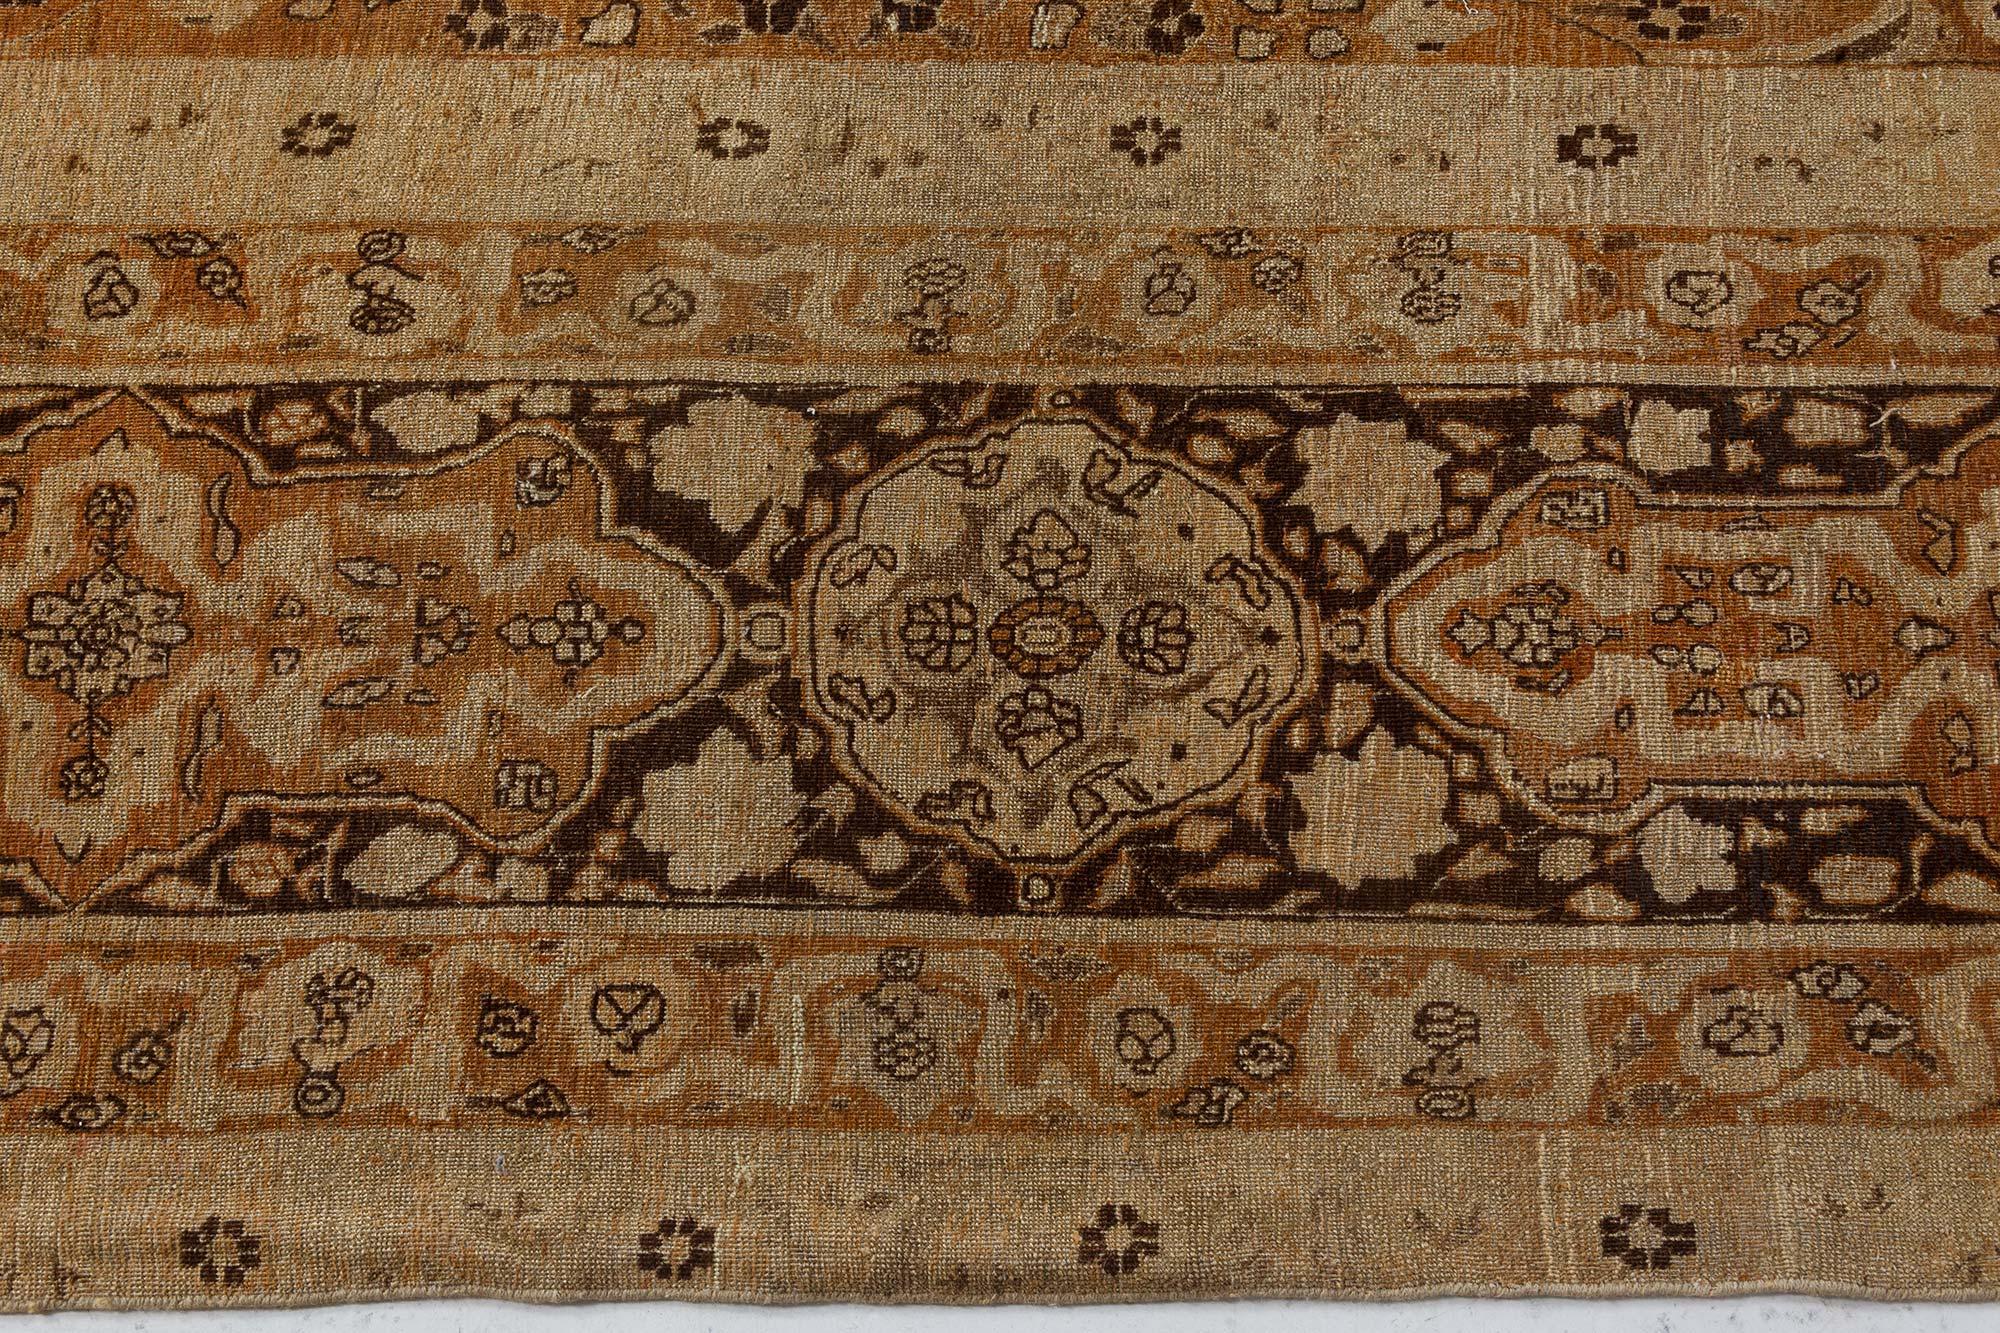 Authentic oversized 19th century Persian Tabriz handmade wool carpet
Size: 15'3